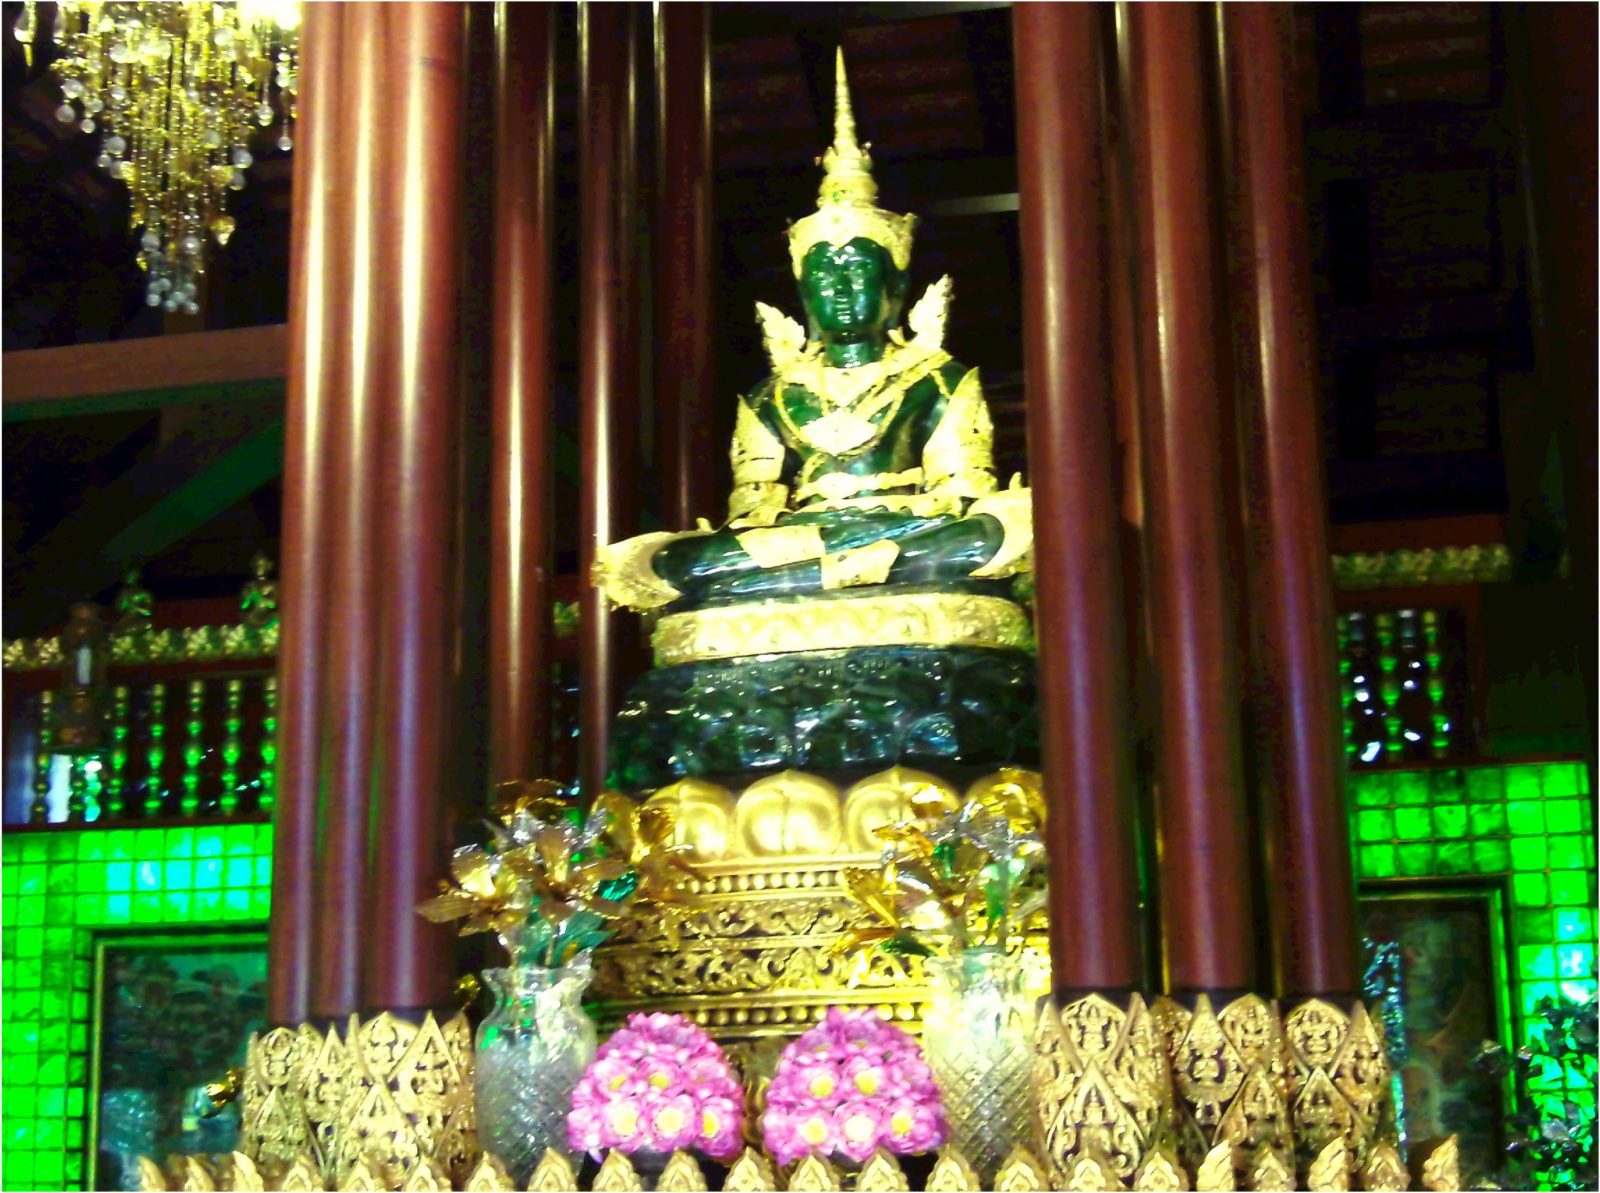 The Temple of Emerald Buddha